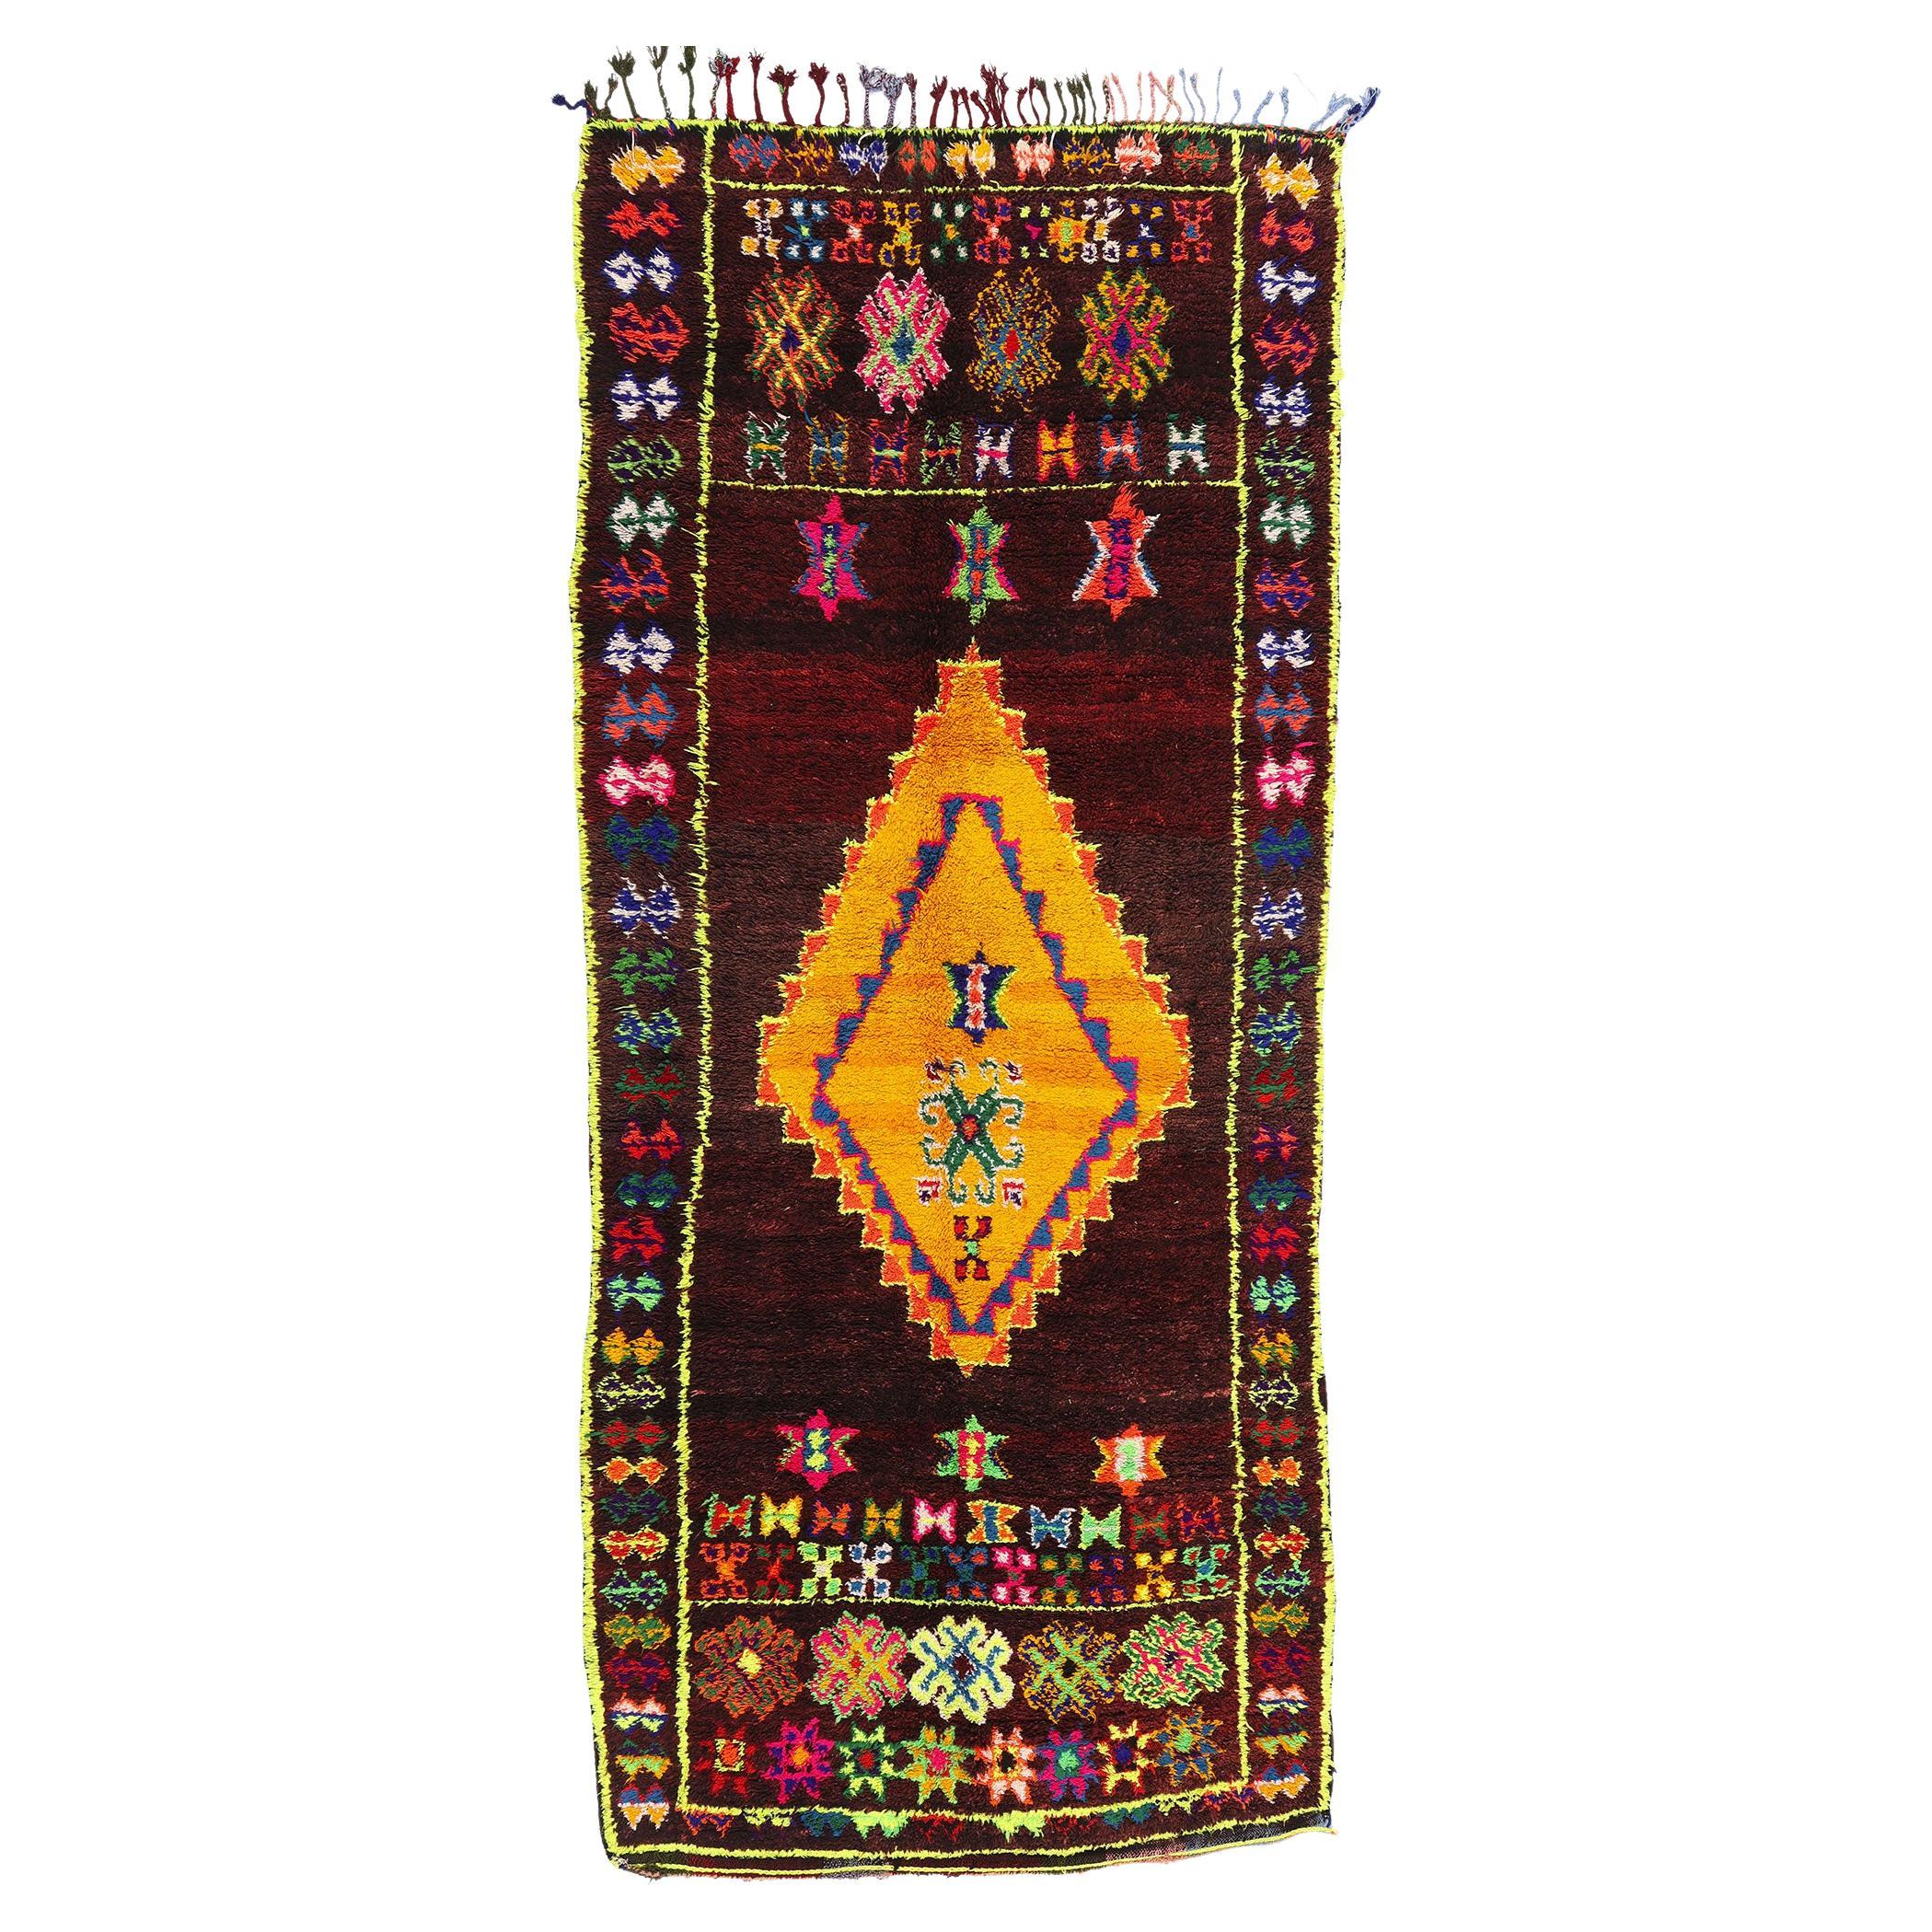 Vintage Beni MGuild Moroccan Rug, Bold Boho Meets Maximalist Style For Sale